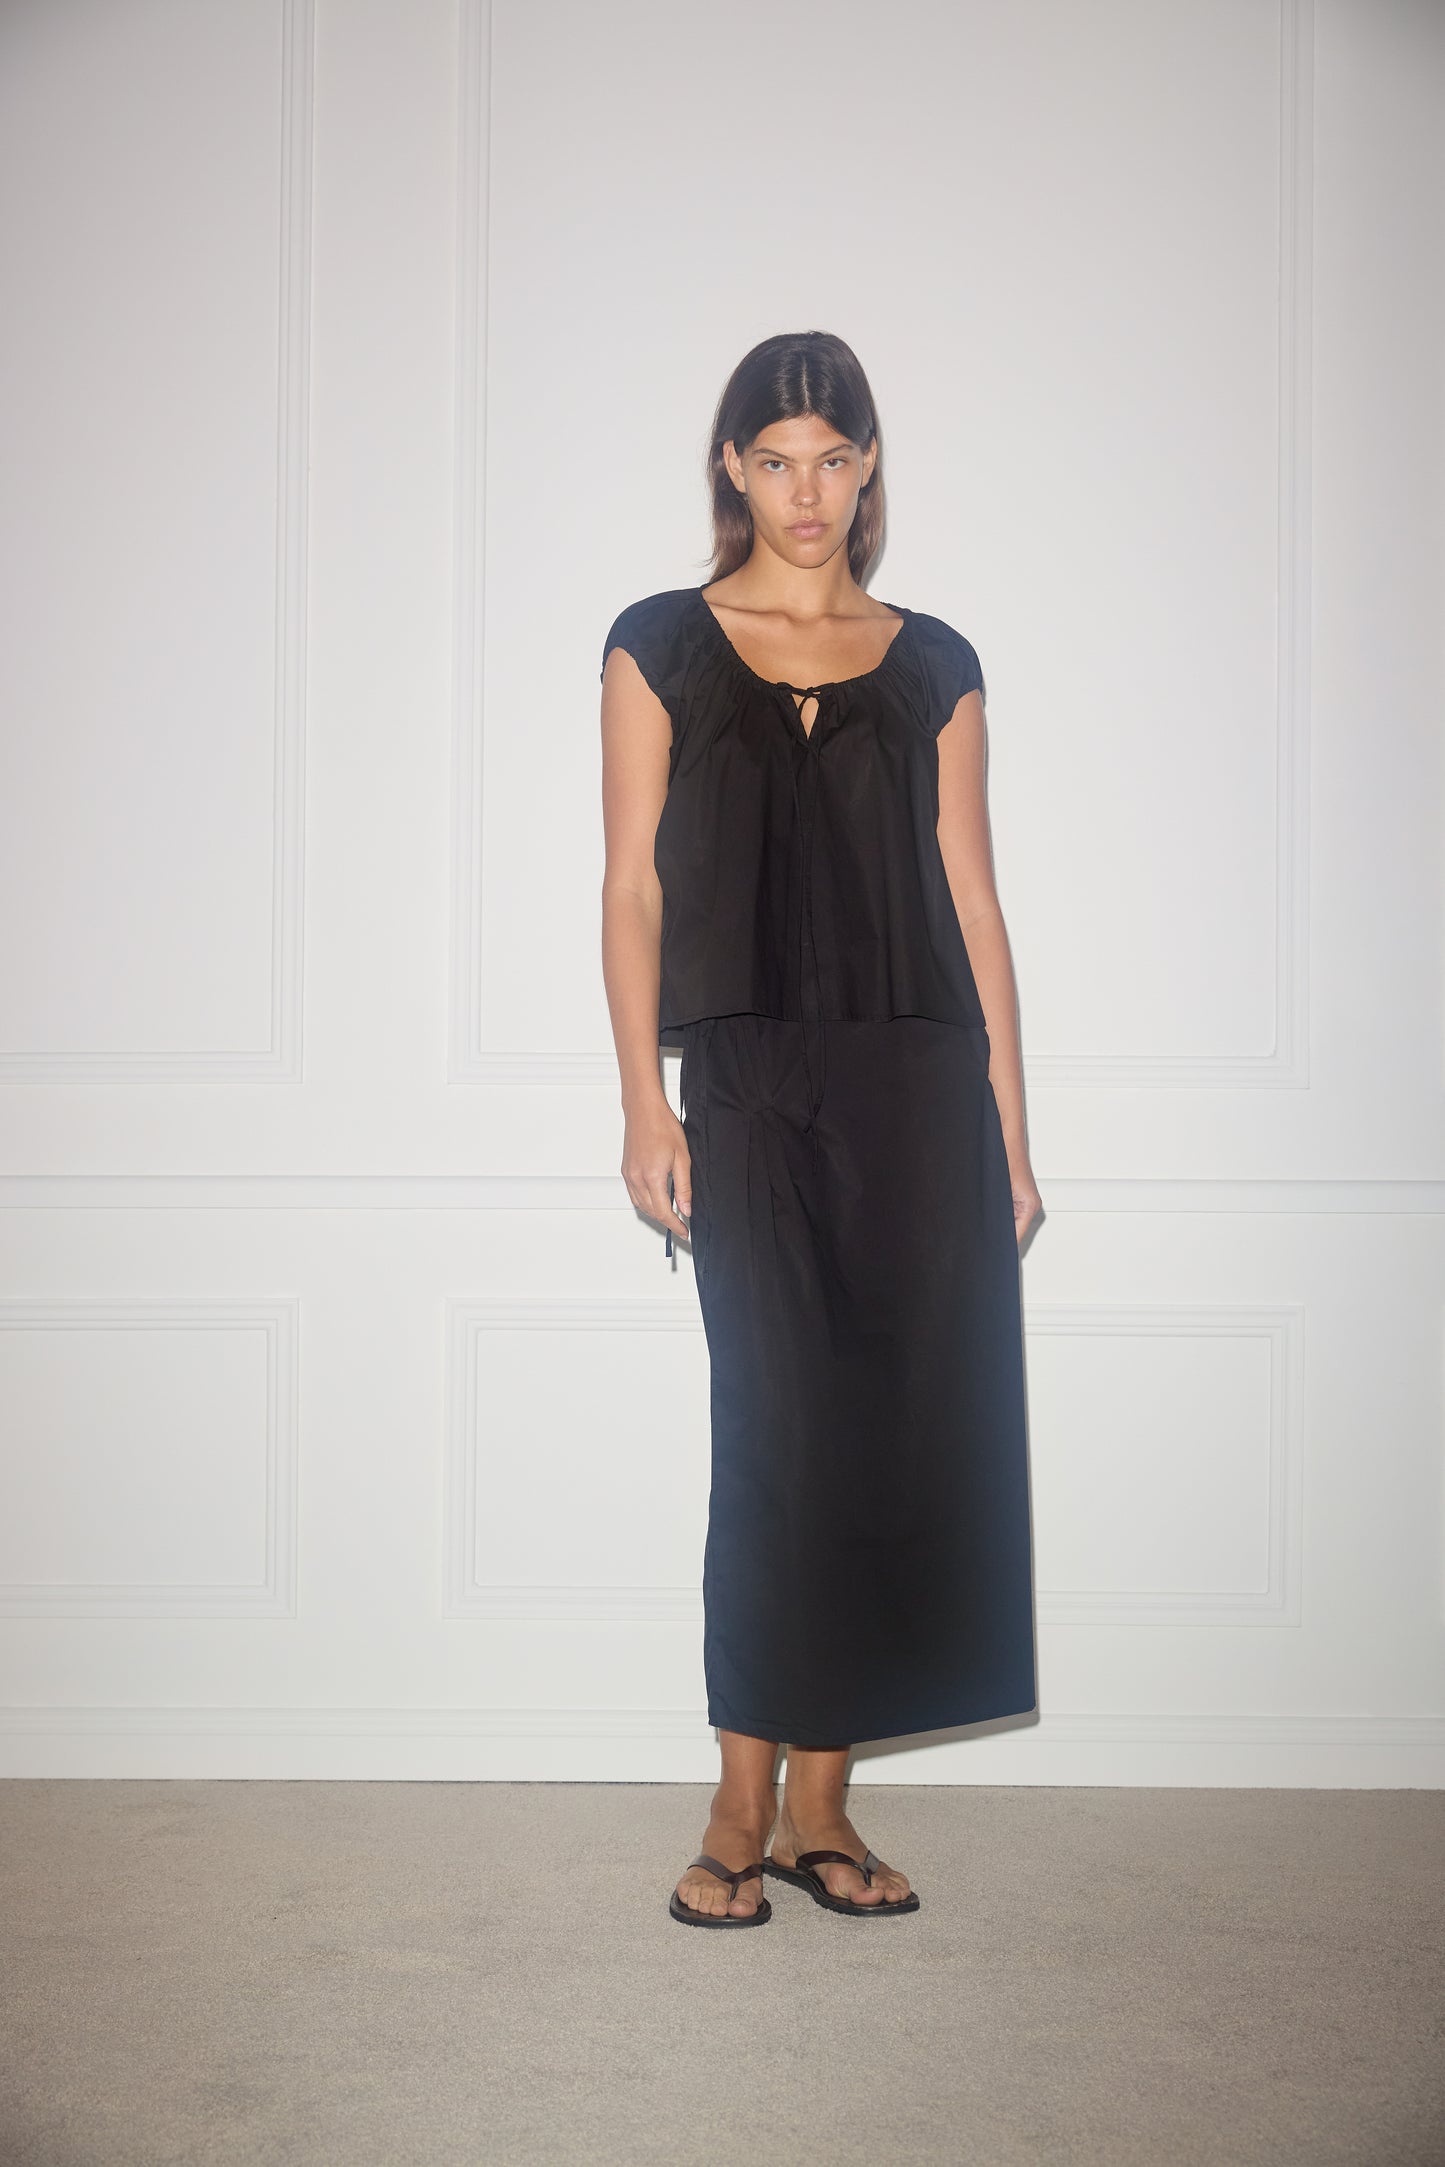 Female model wearing One Panel Top - Black by Deiji Studios against plain background